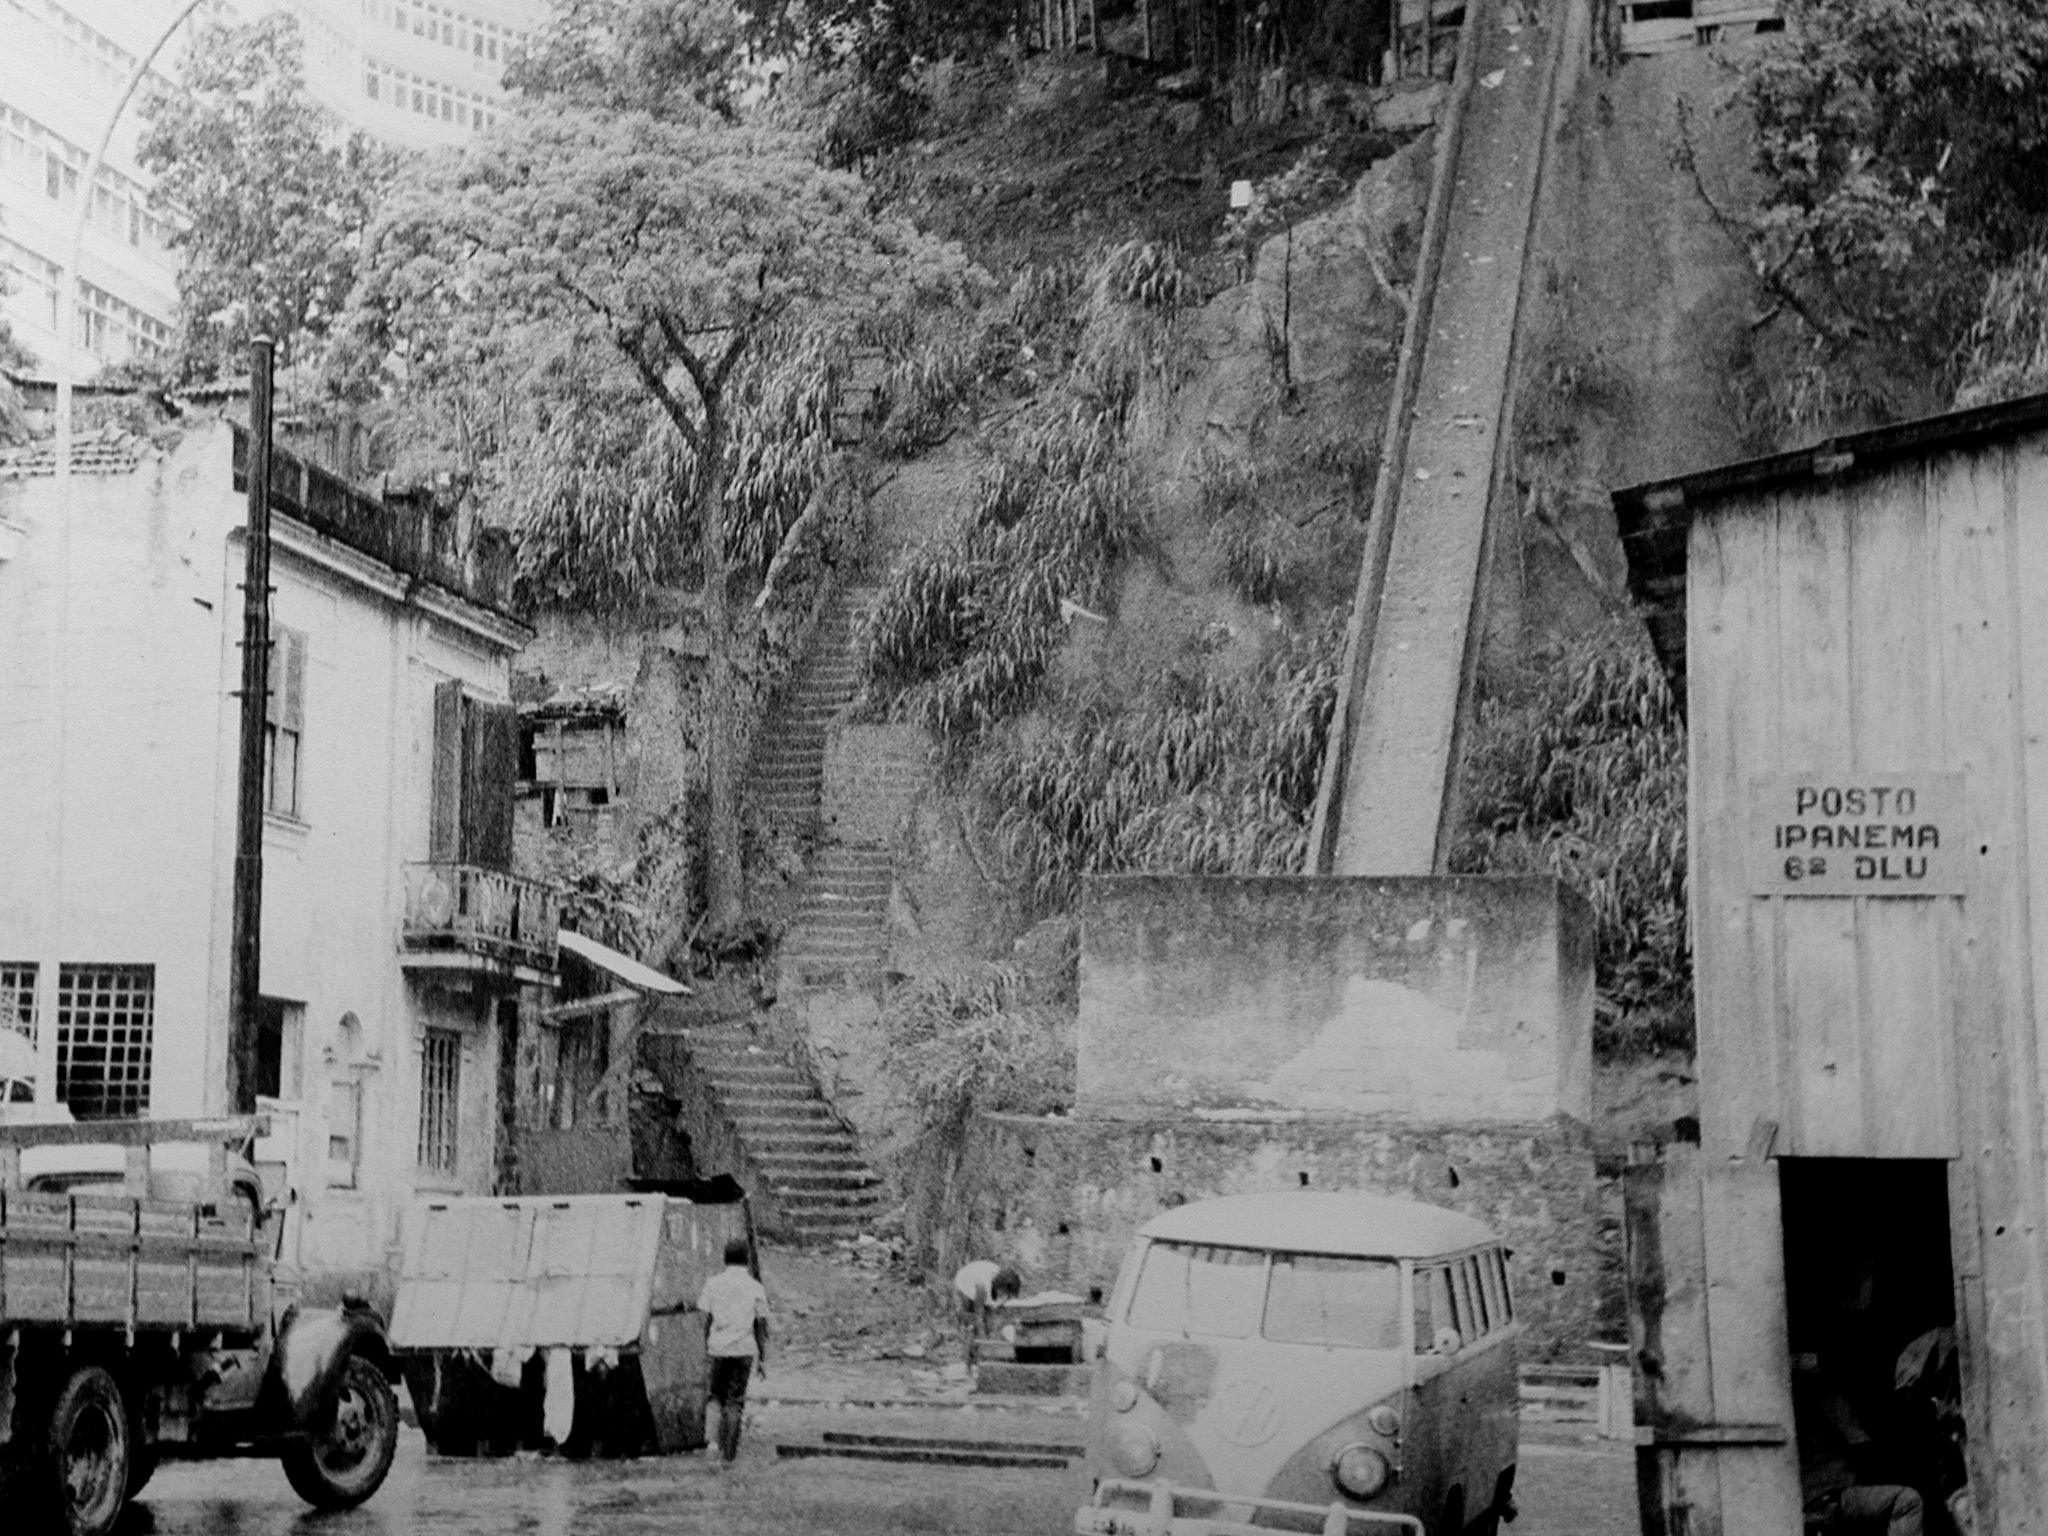 Cantagalo in 1972. Image courtesy of Favela Tem Memoria/Viva Rio